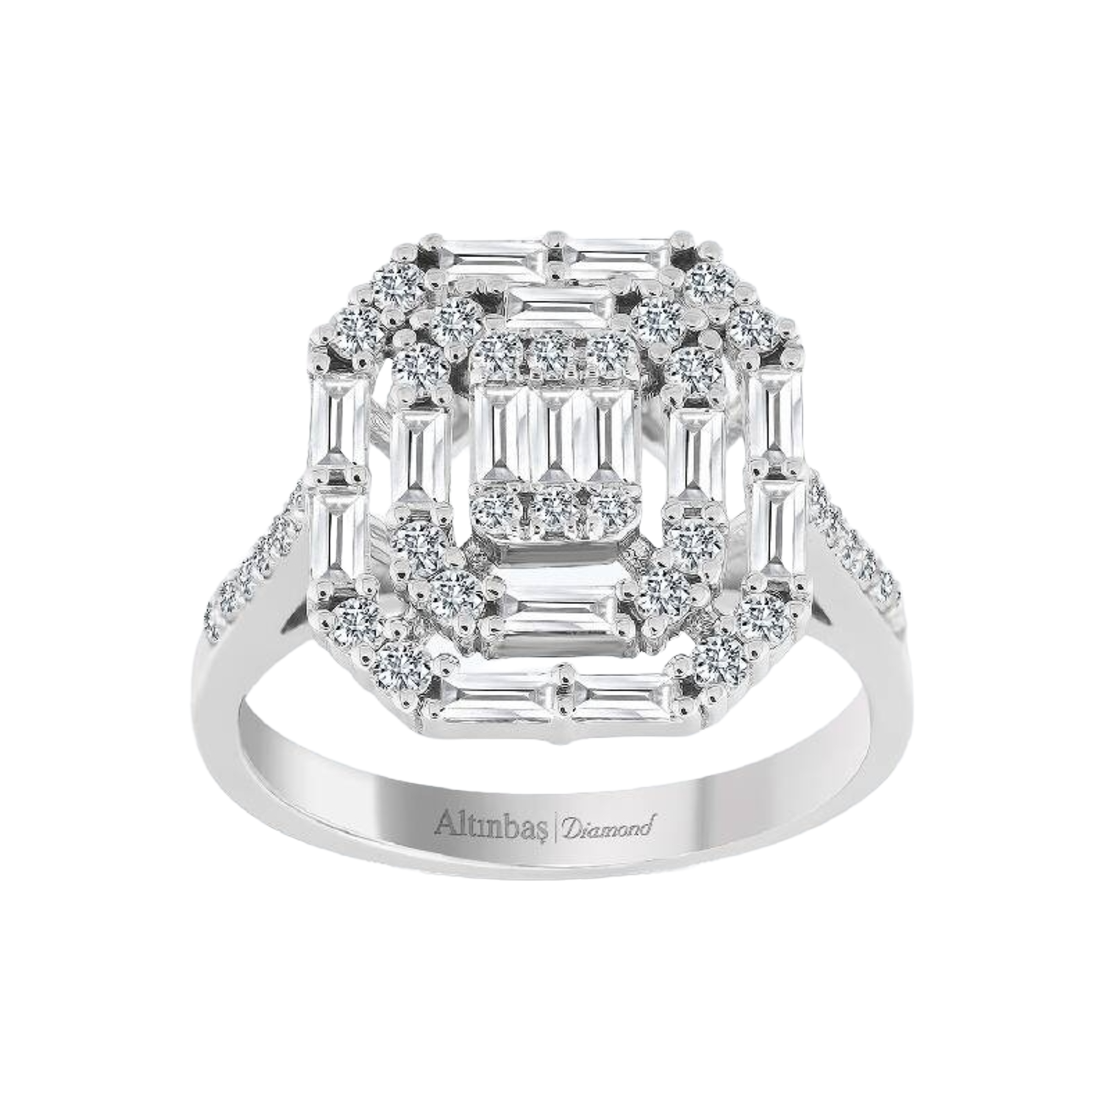 1.07 k Diamond ring